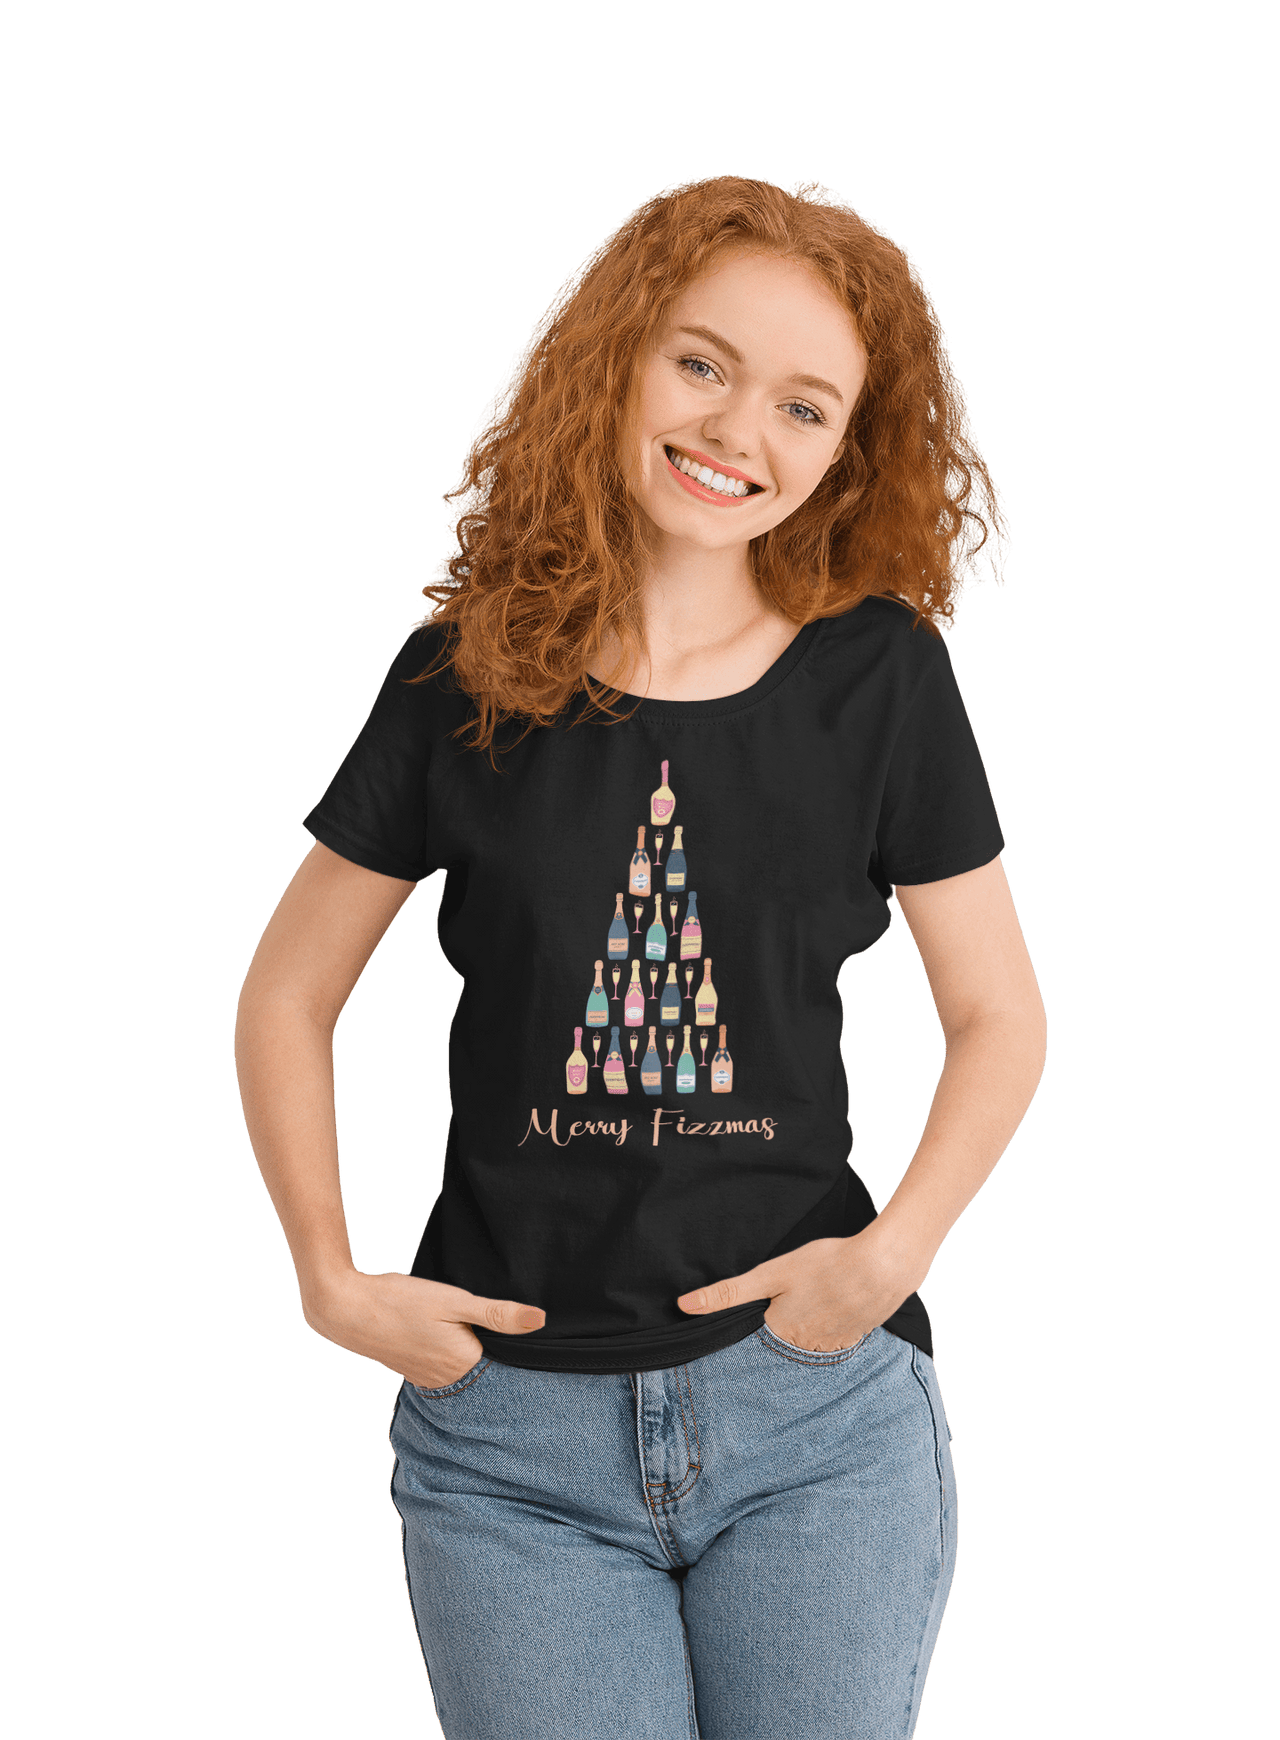 Christmas Fizzmas Tree Womens Fitted T-Shirt 8Ball